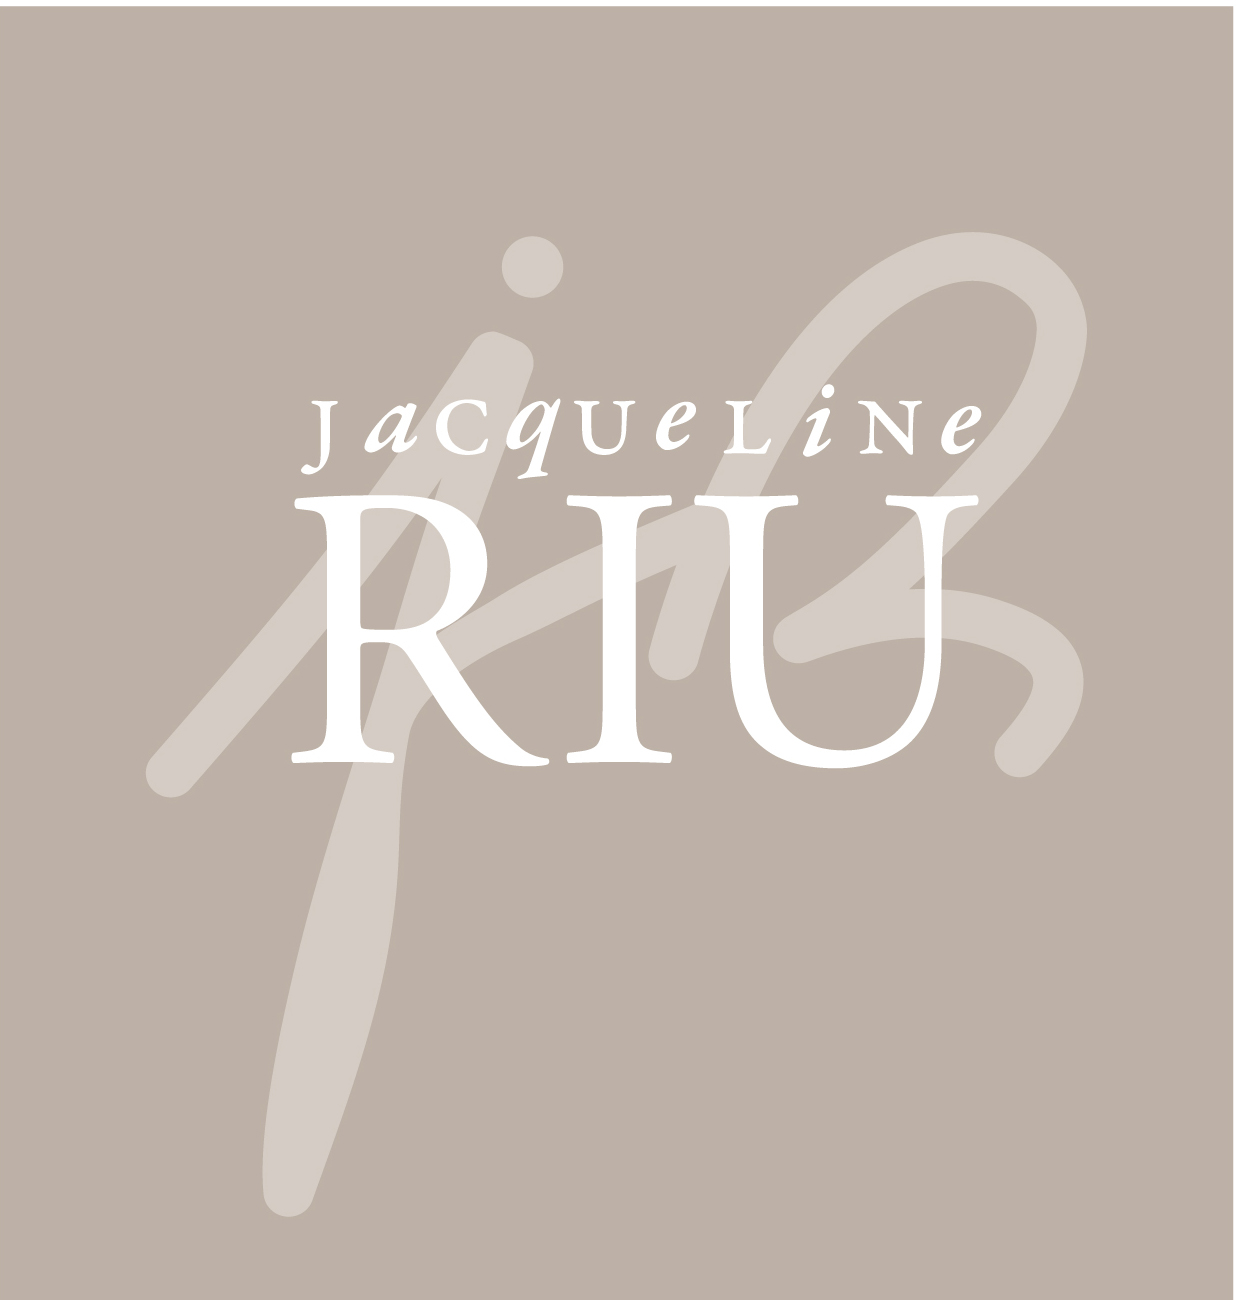 www.toutesvosmarques.com : BOUTIQUE JACQUELINE RIU propose la marque JACQUELINE RIU